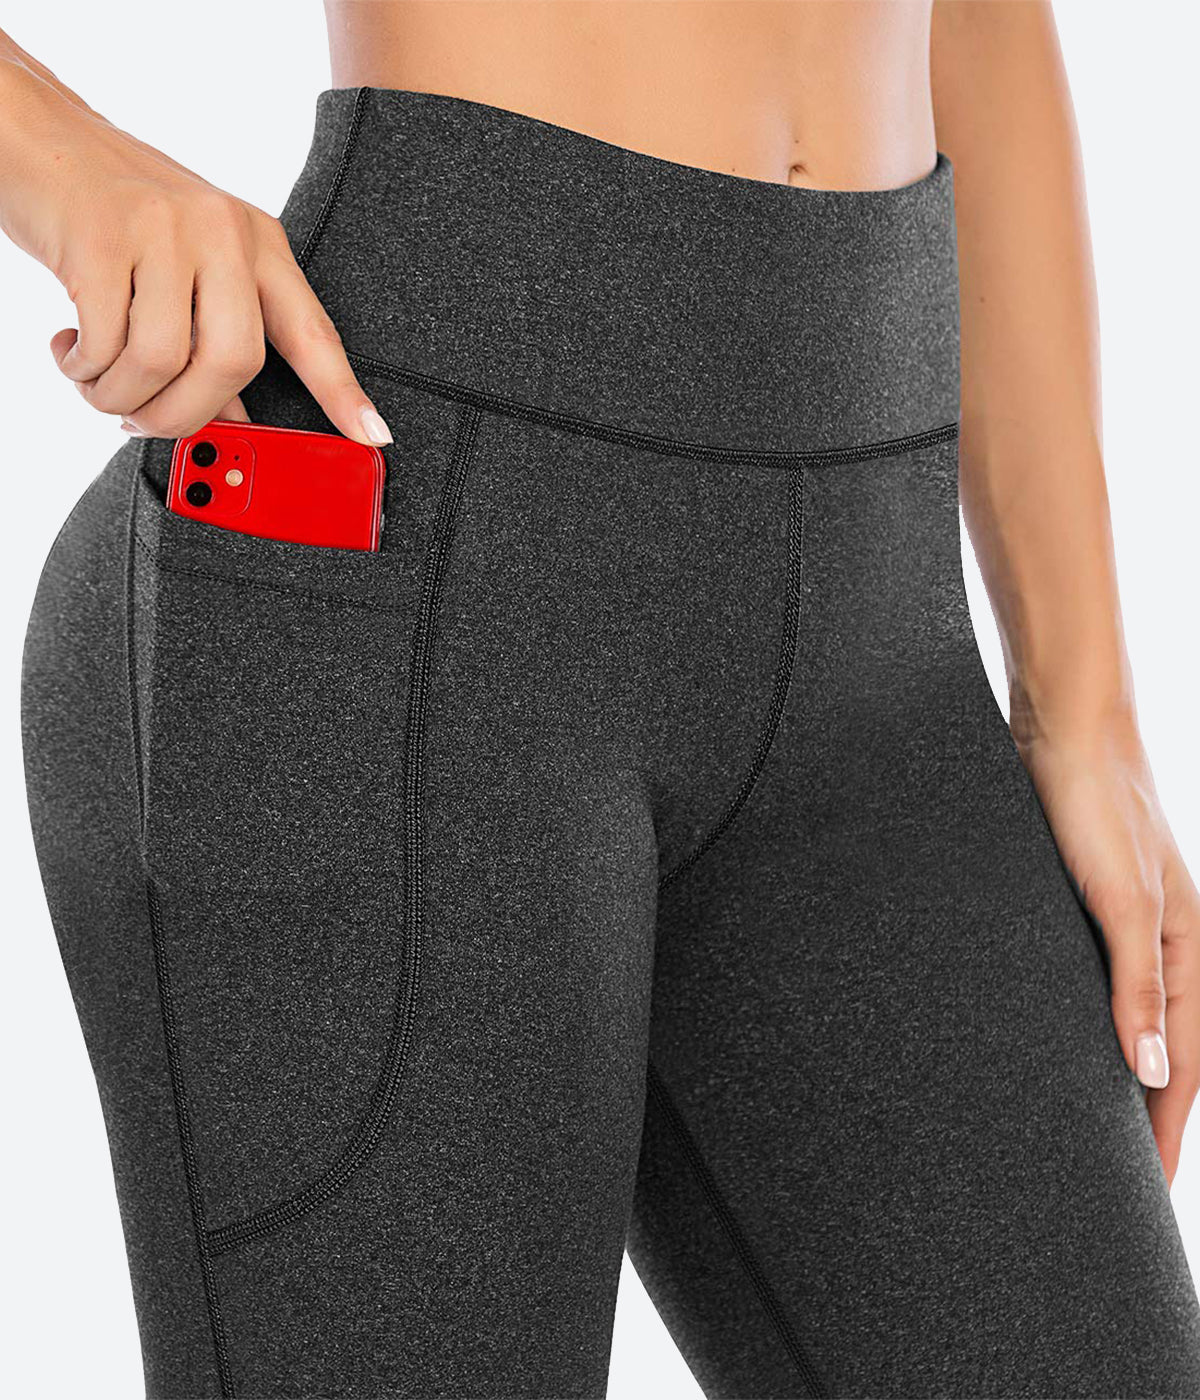 kpoplk Boot Cut Yoga Pants Women,Leggings with Pockets for Women, High  Waisted Tummy Control Workout Yoga Pants(Black,3XL) 